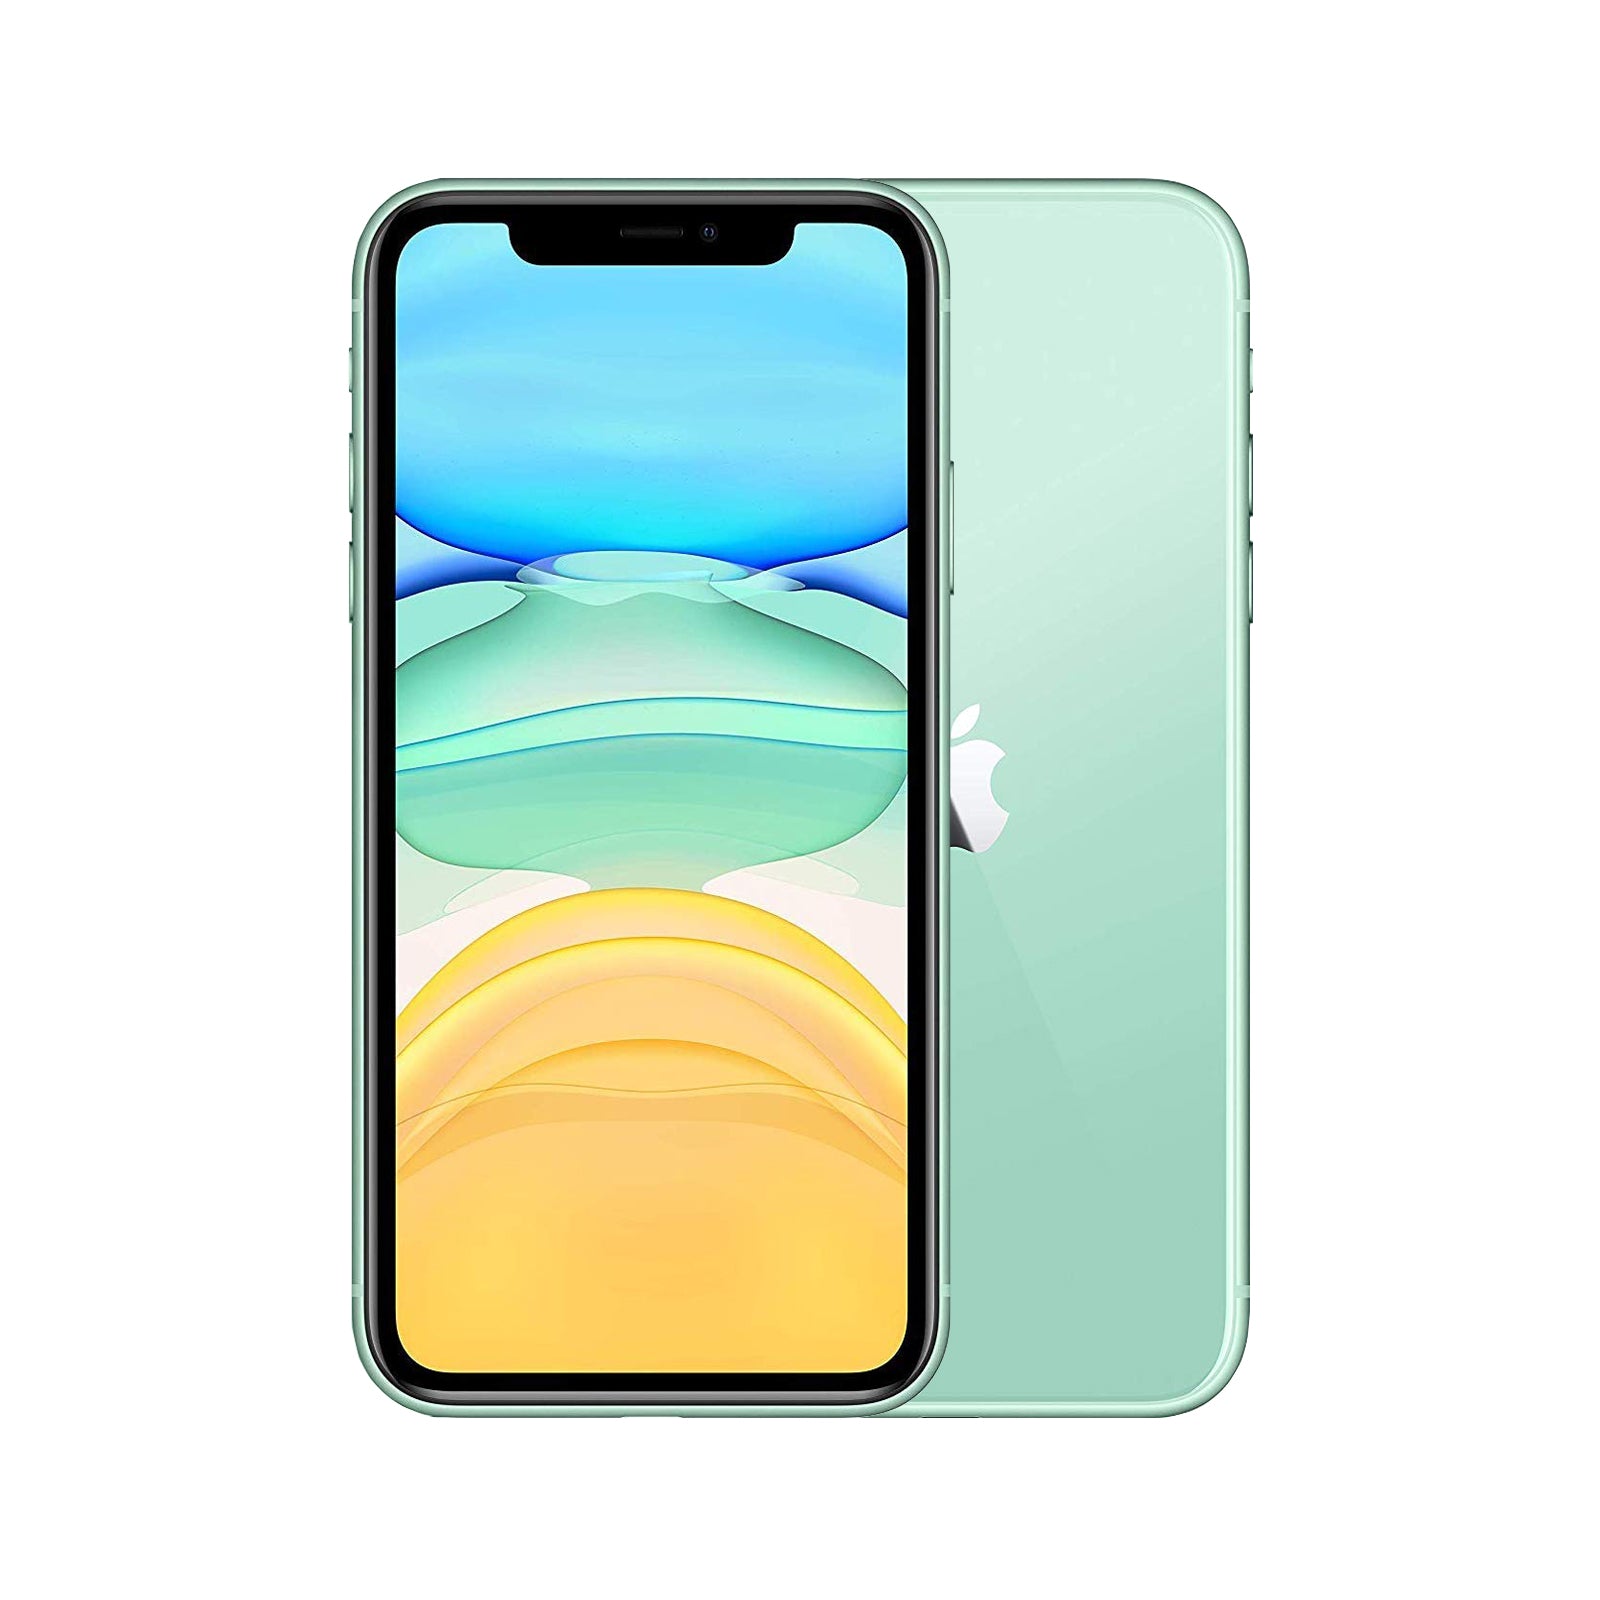 Apple iPhone 11 64GB Green - Good - Refurbished